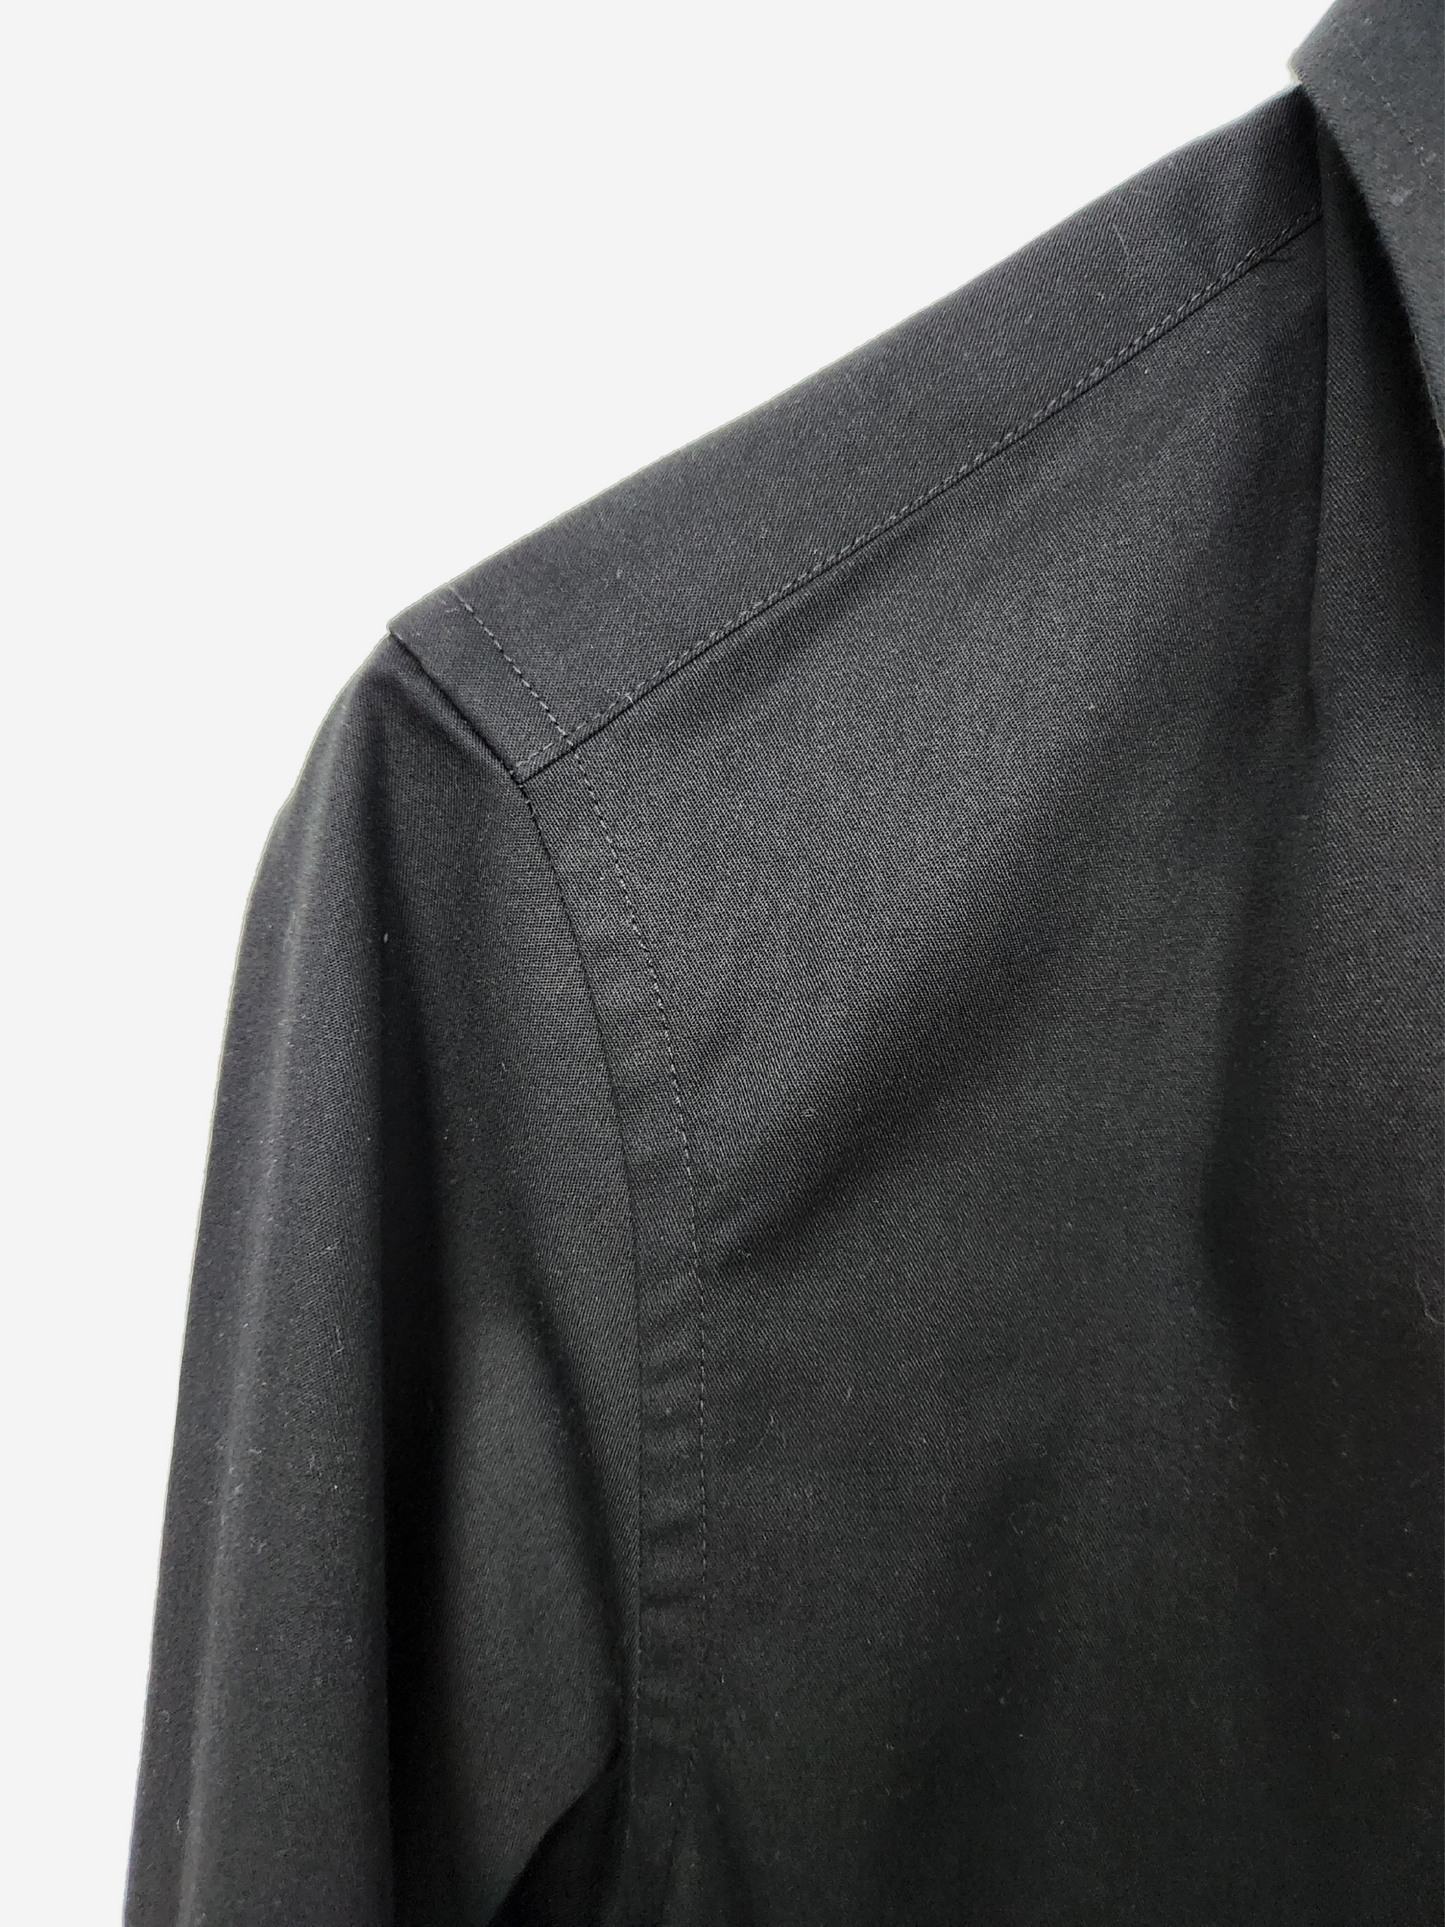 Bungee Shirt Black Medium